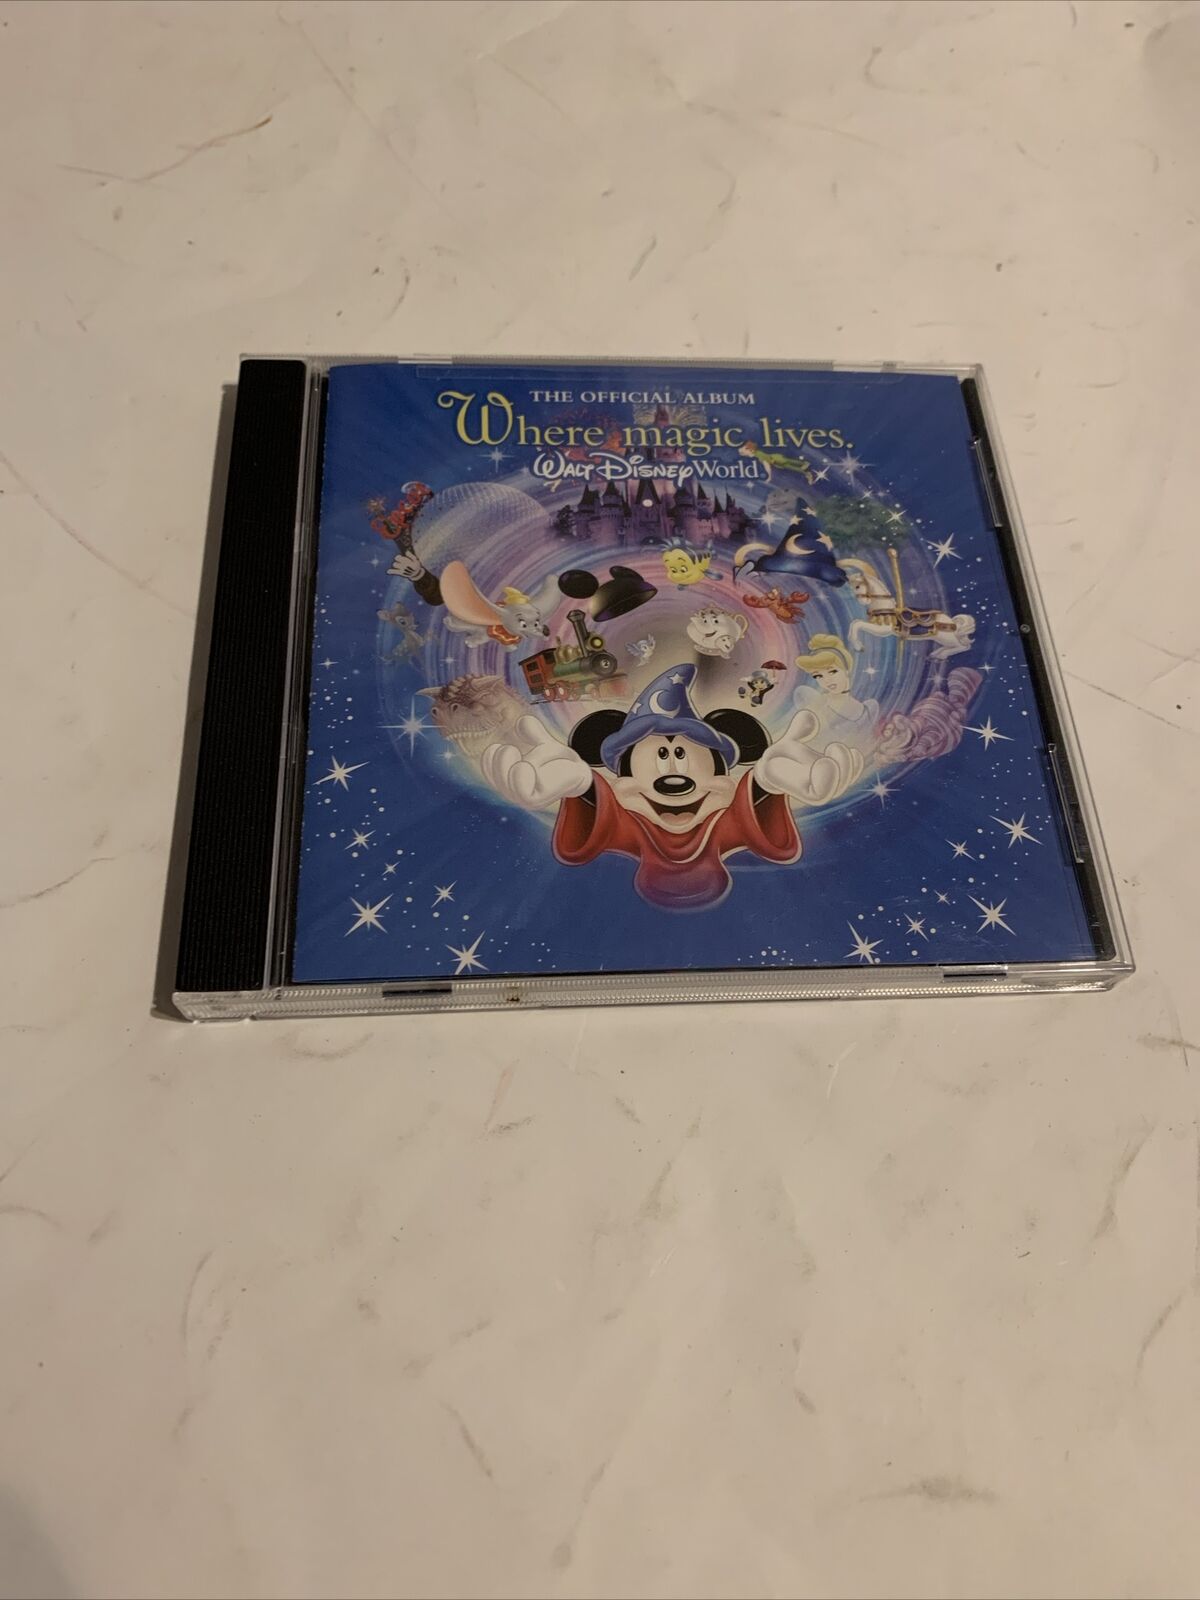 WALT DISNEY WORLD The Official Album CD Where Magic Lives 2004